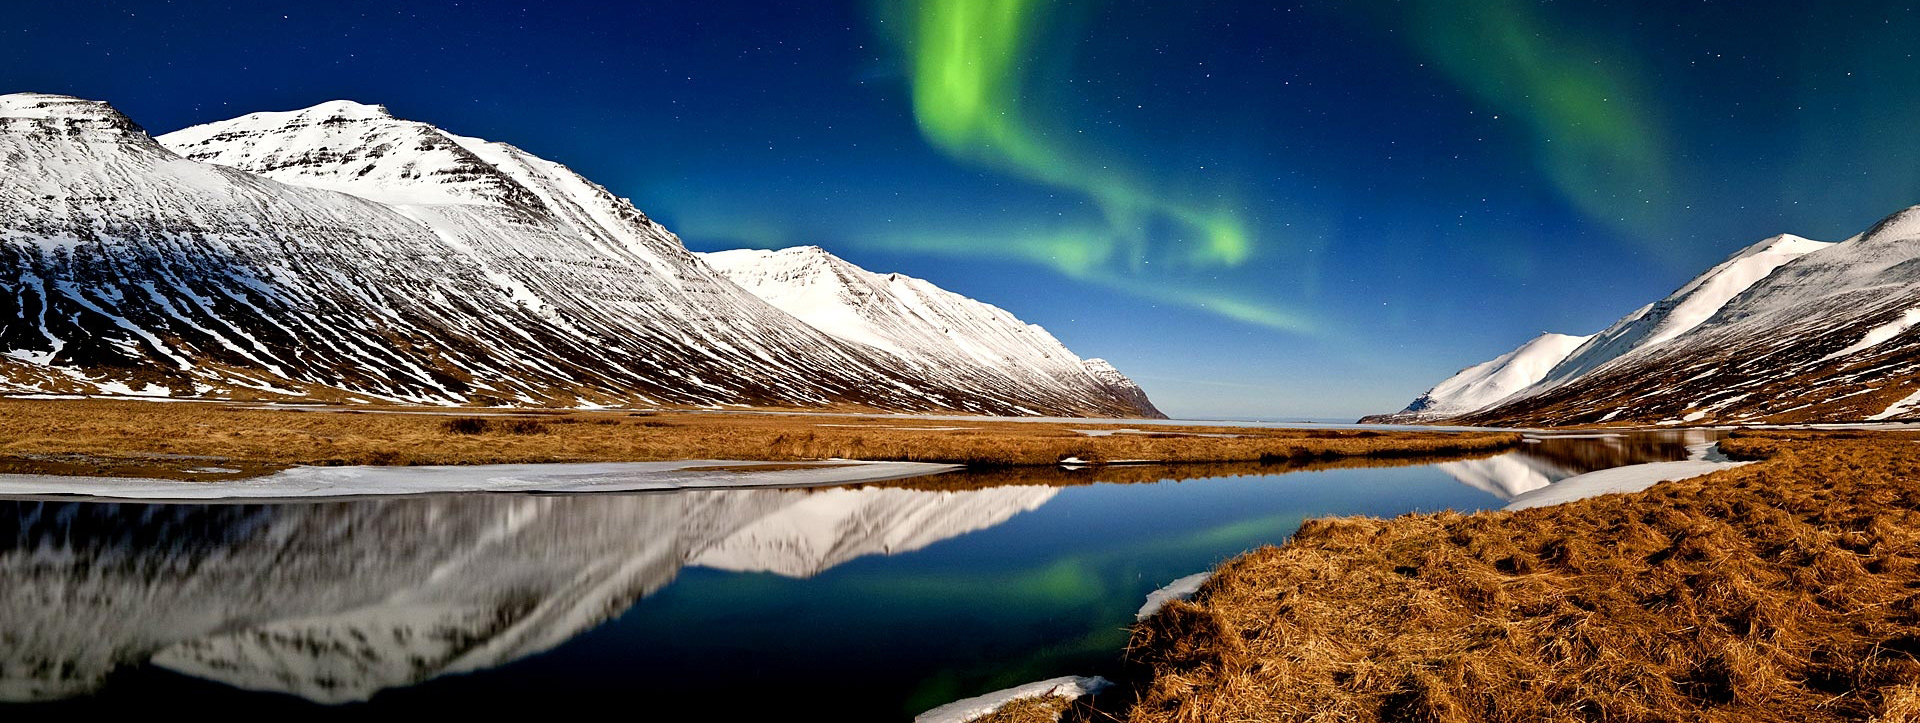 Aurora Borealis, Iceland, popular questions of 2016